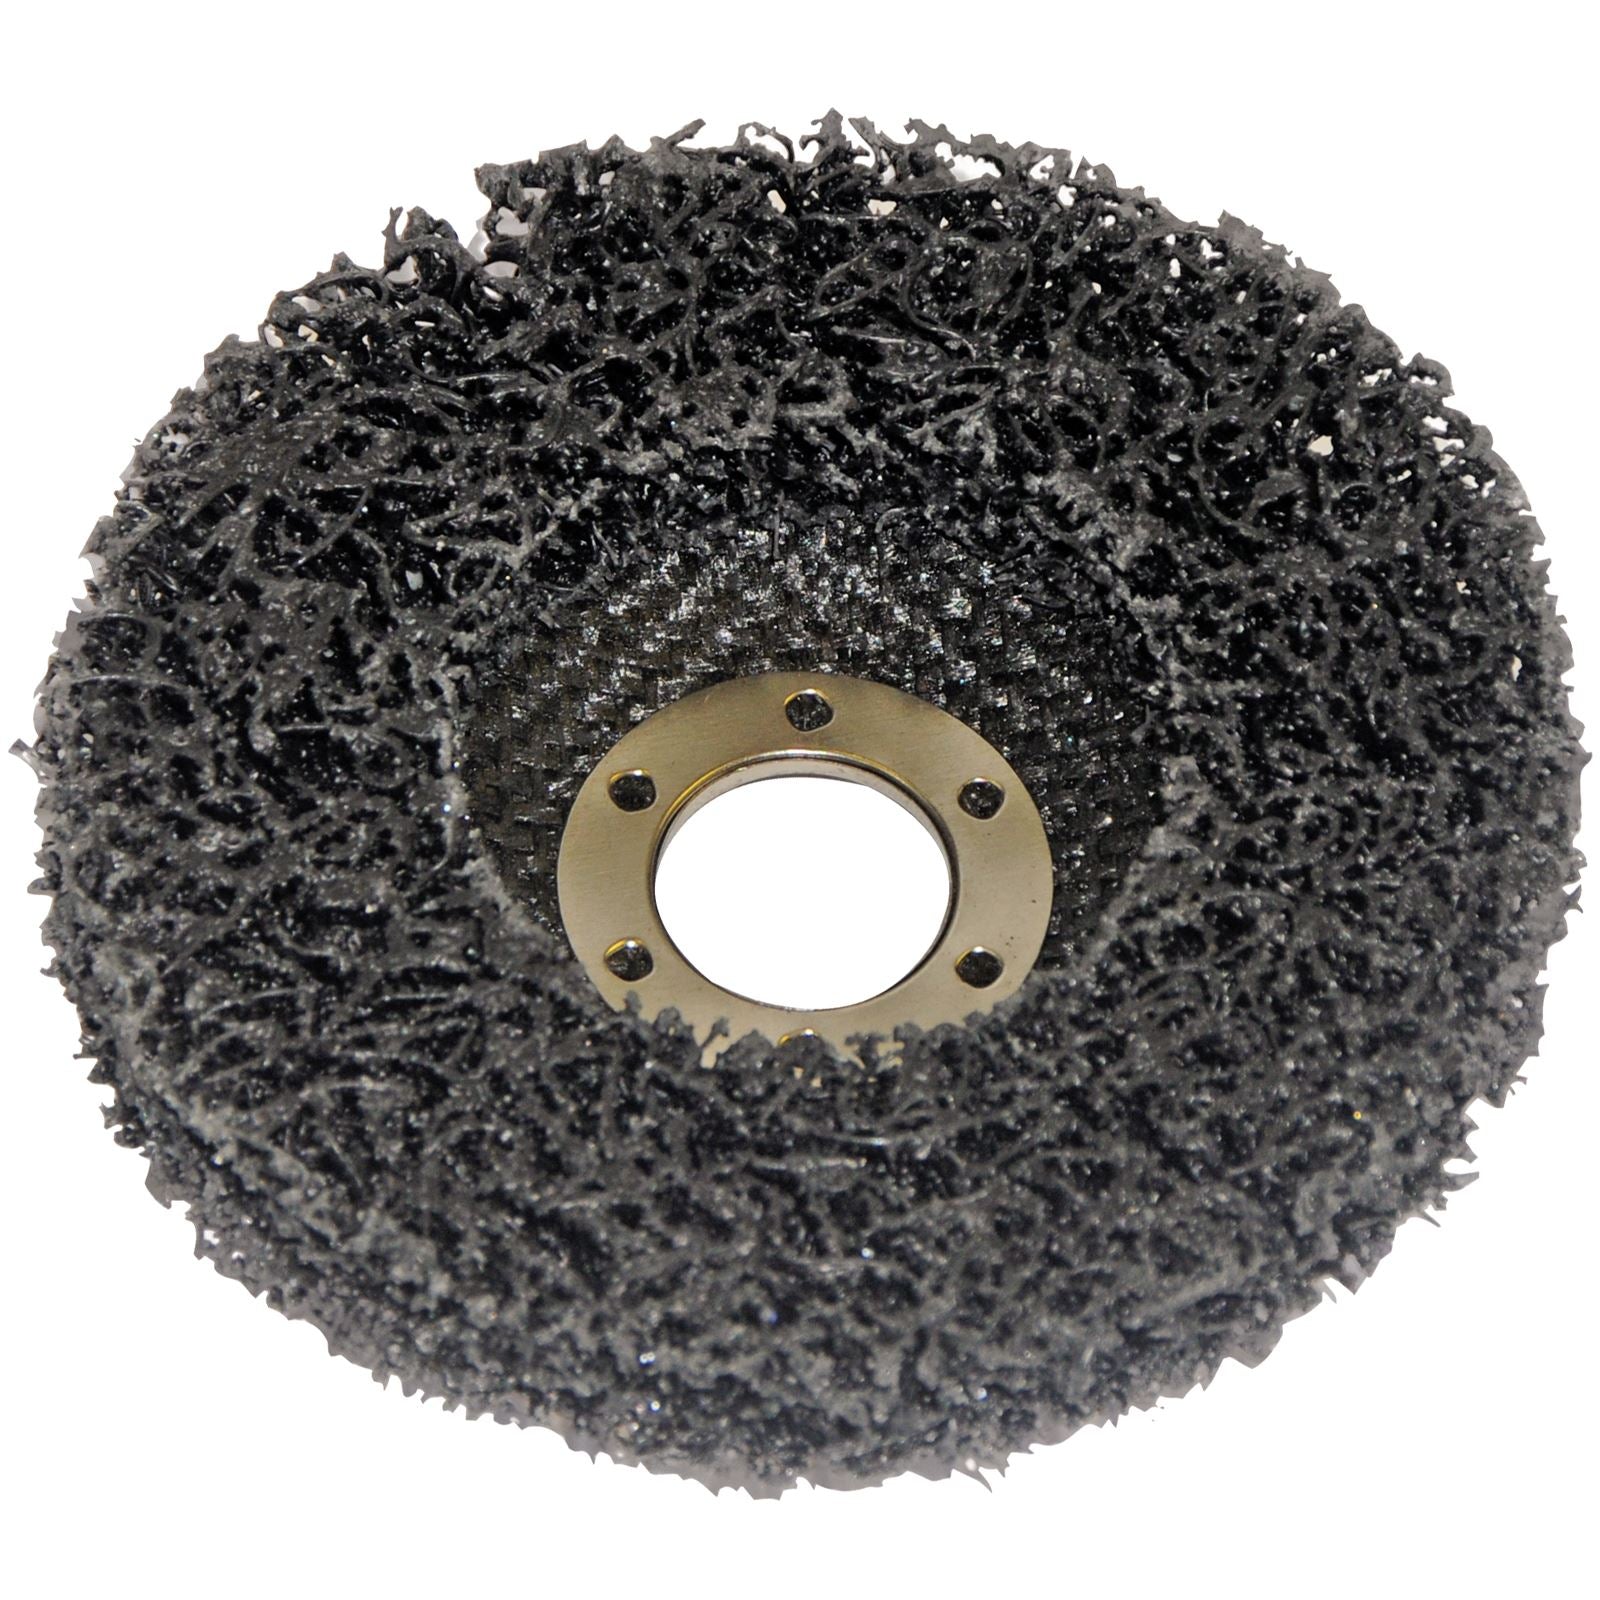 Silverline Polycarbide Abrasive Discs 100, 115 Or 125mm